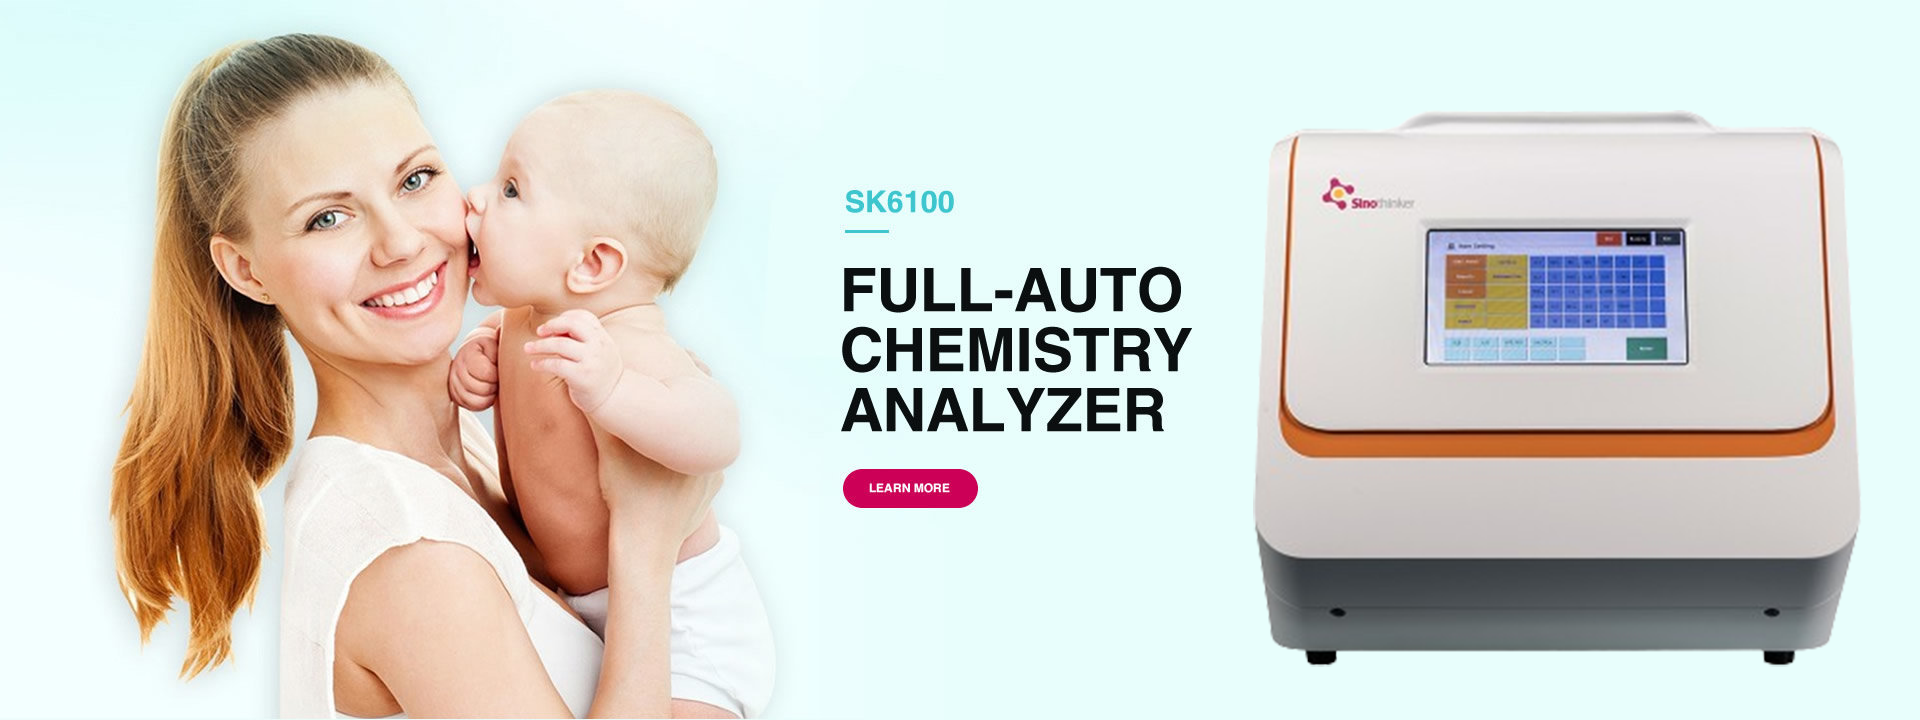 Full-Auto chemistry analyzer